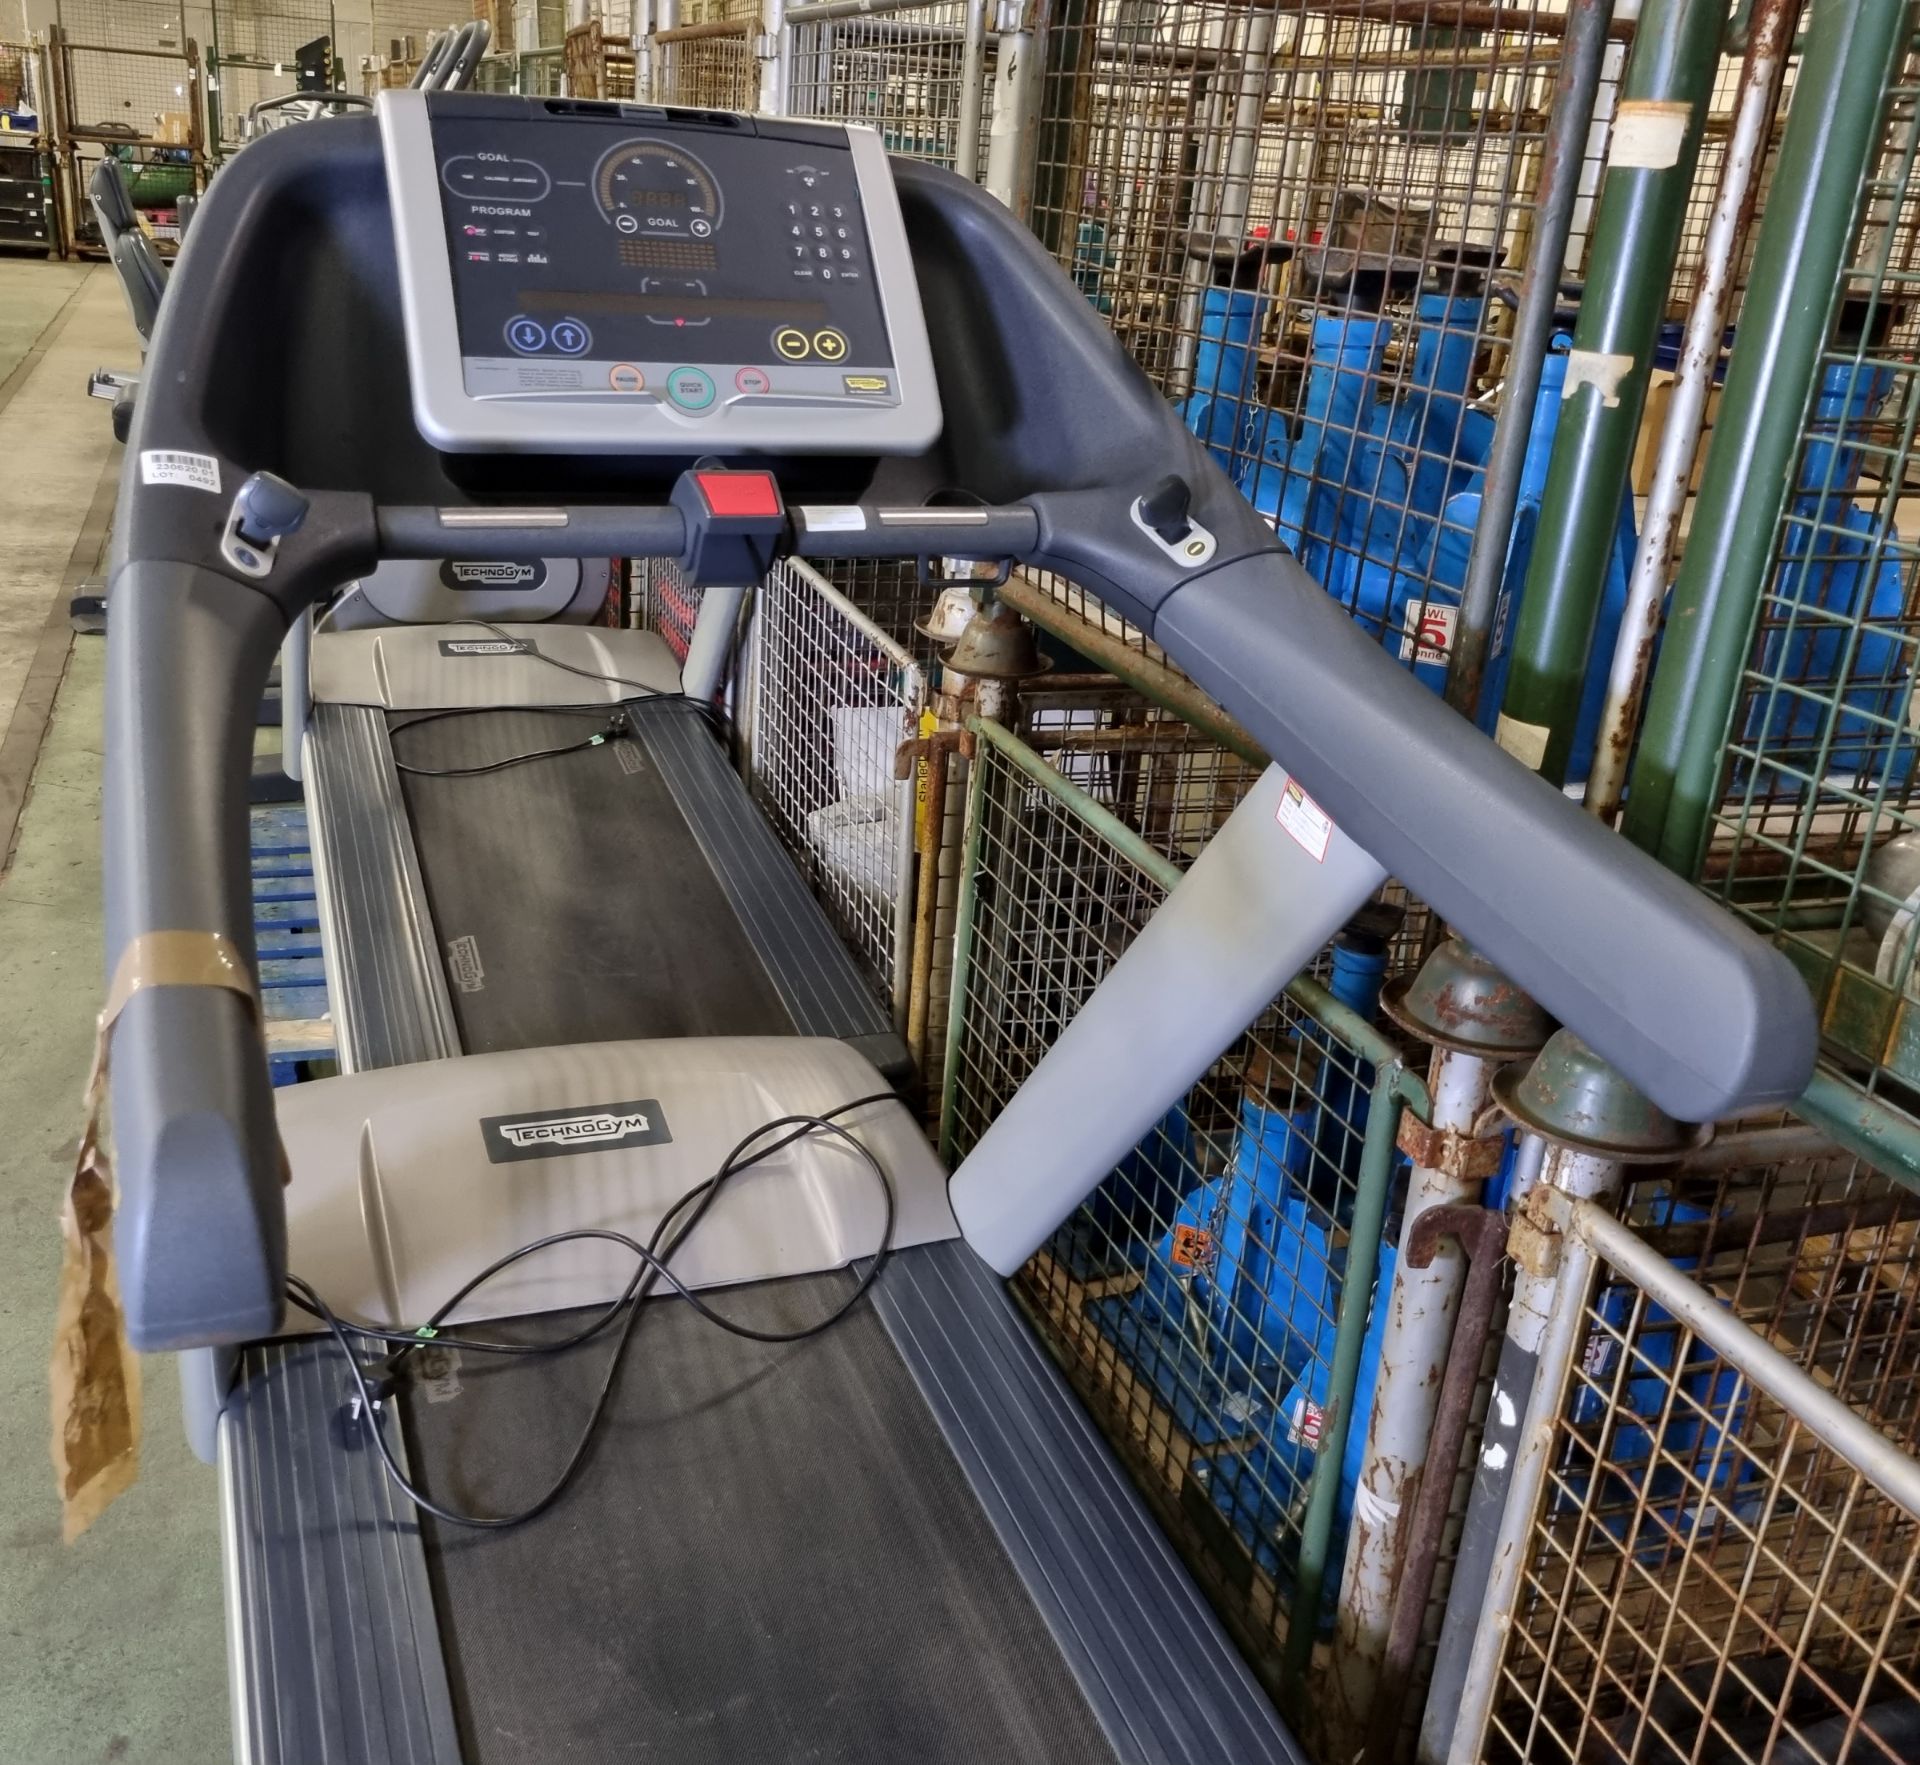 TechnoGym Excite treadmill - W 2160 x D 950 x H 1500mm - Image 3 of 4